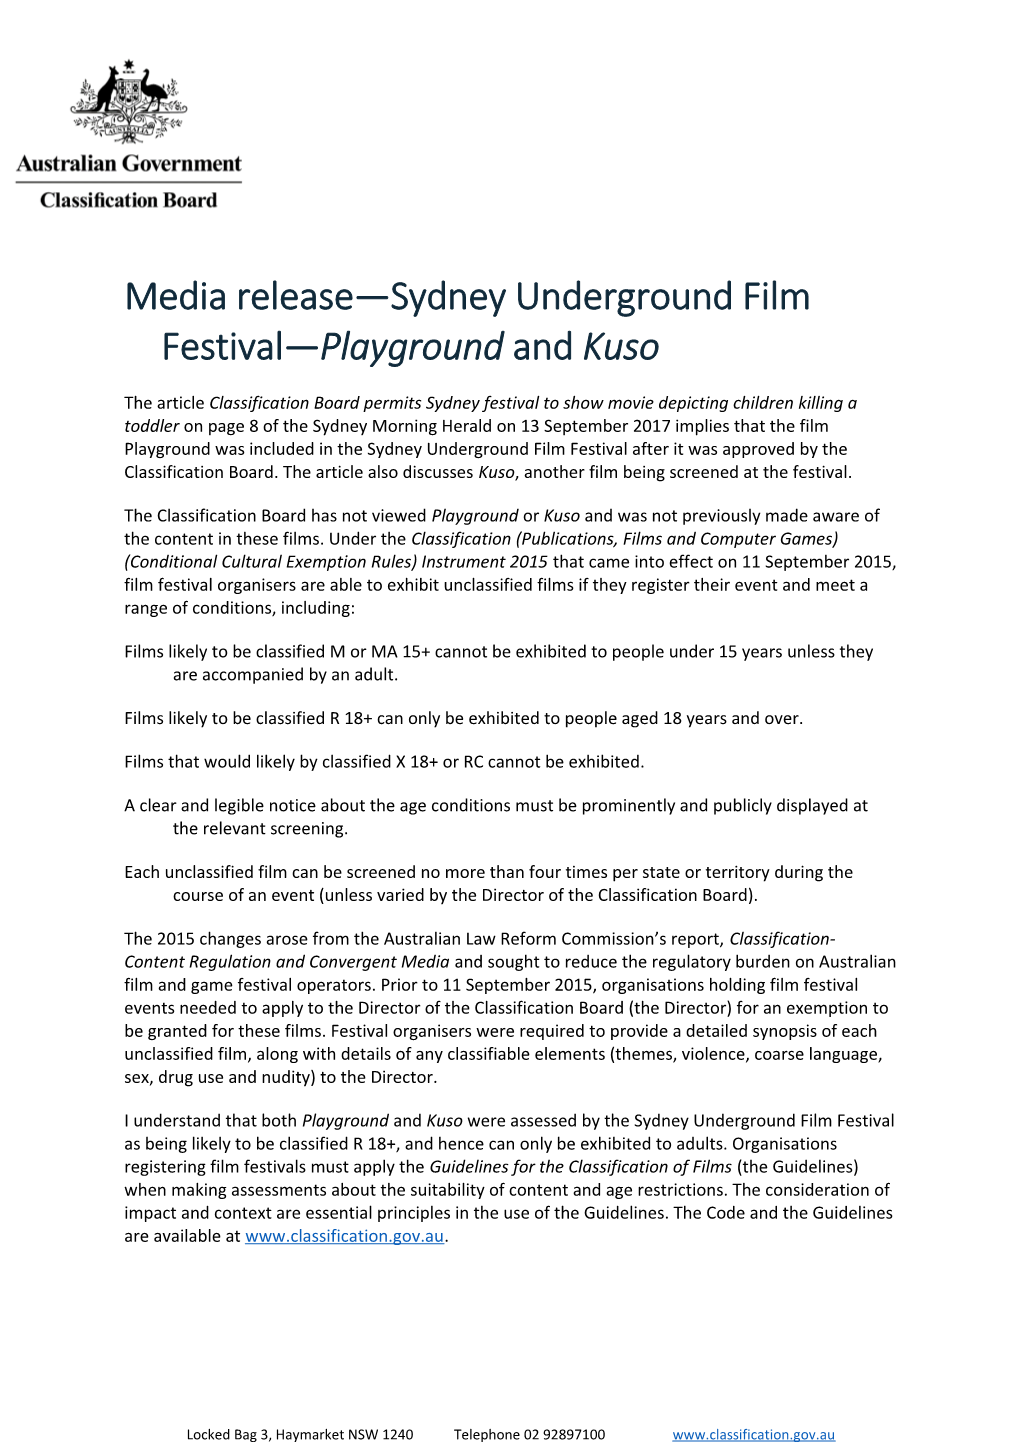 Media Release Sydney Underground Film Festival Playground and Kuso